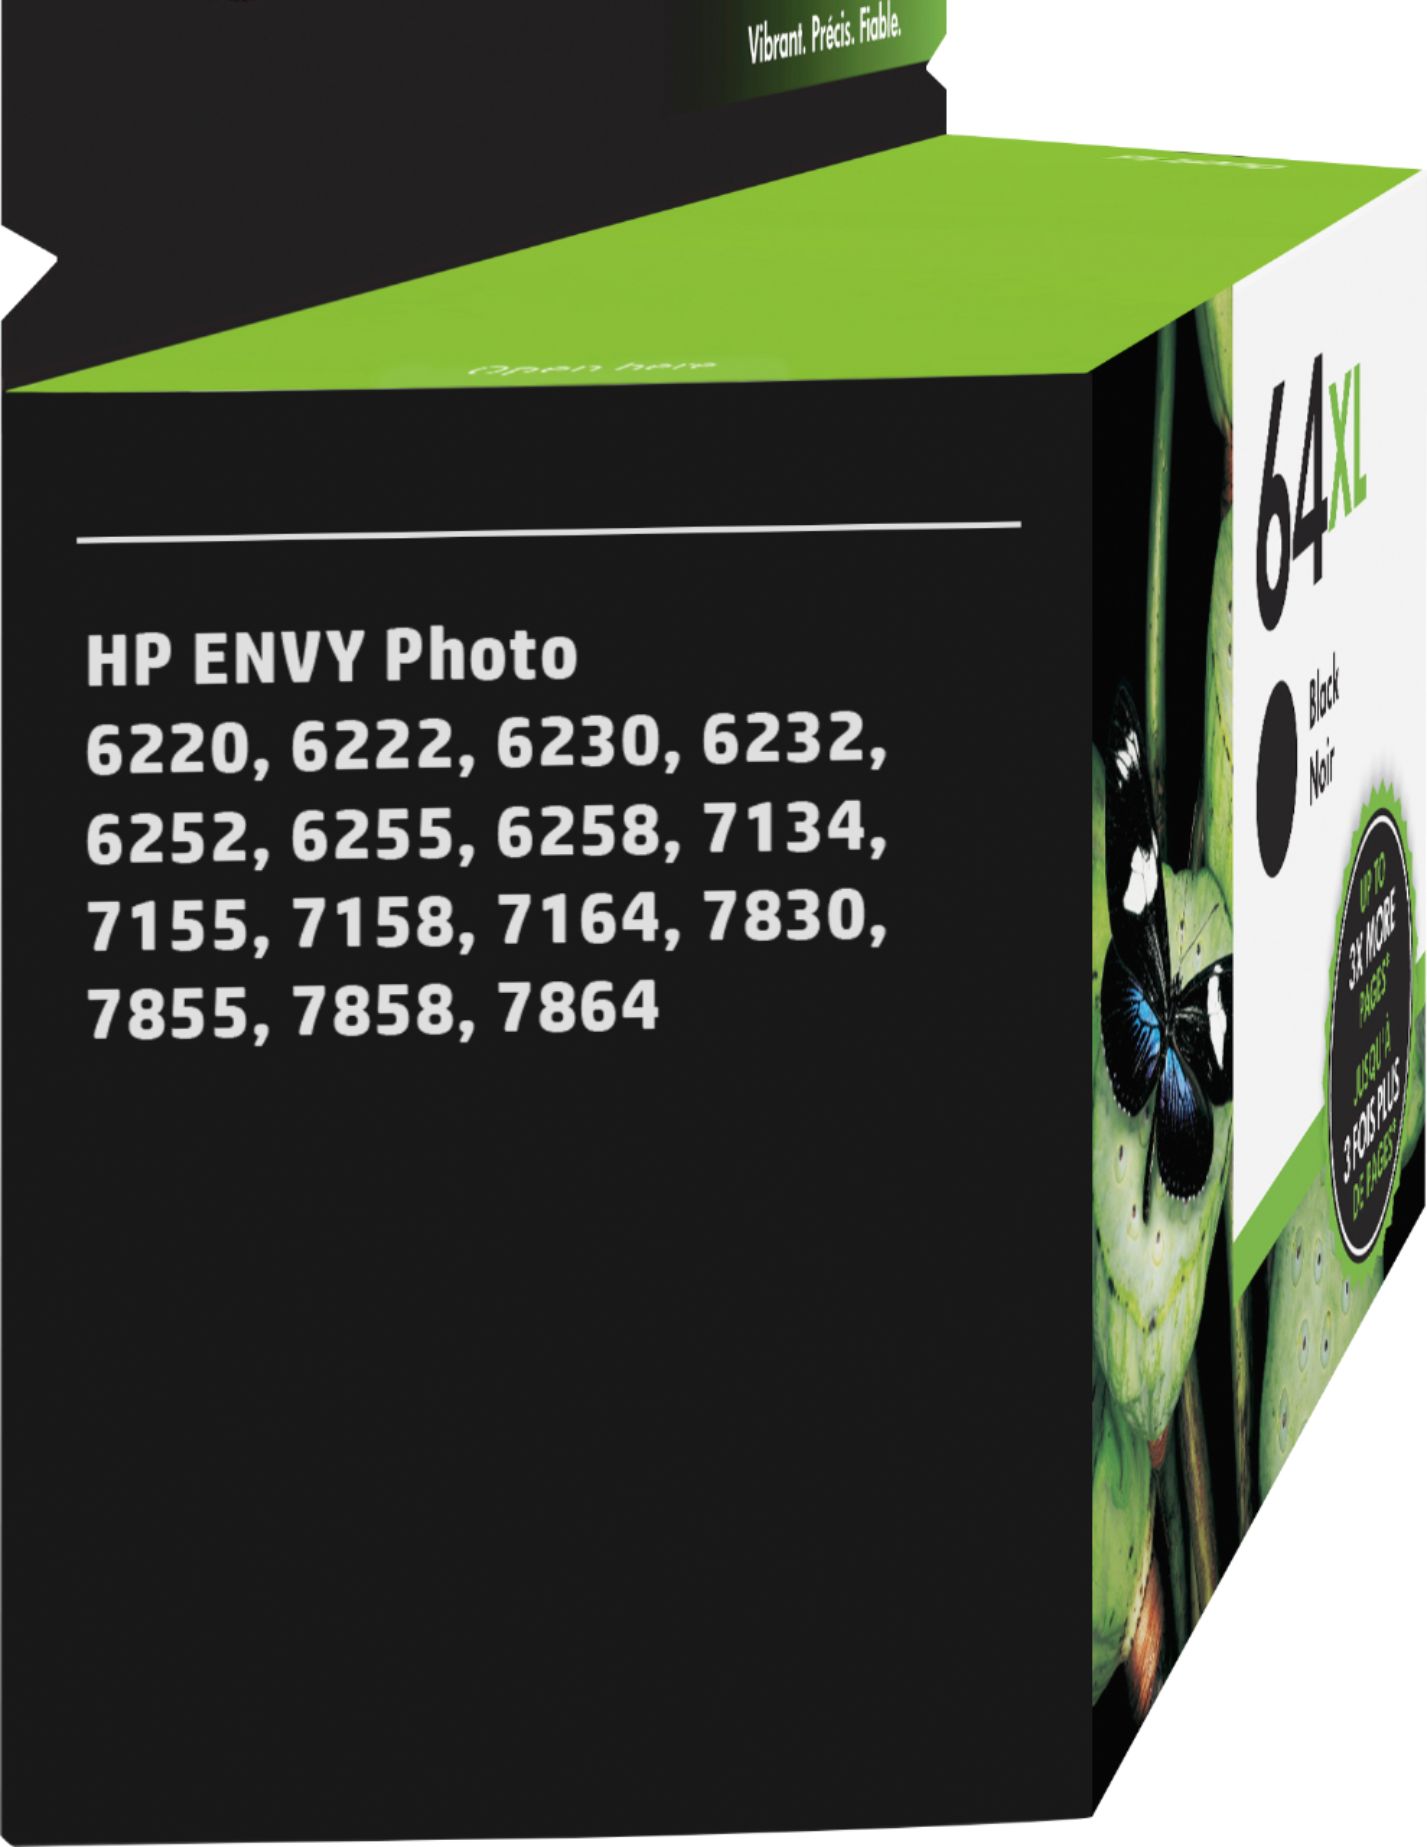 HP - 64XL High-Yield Ink Cartridge - Black